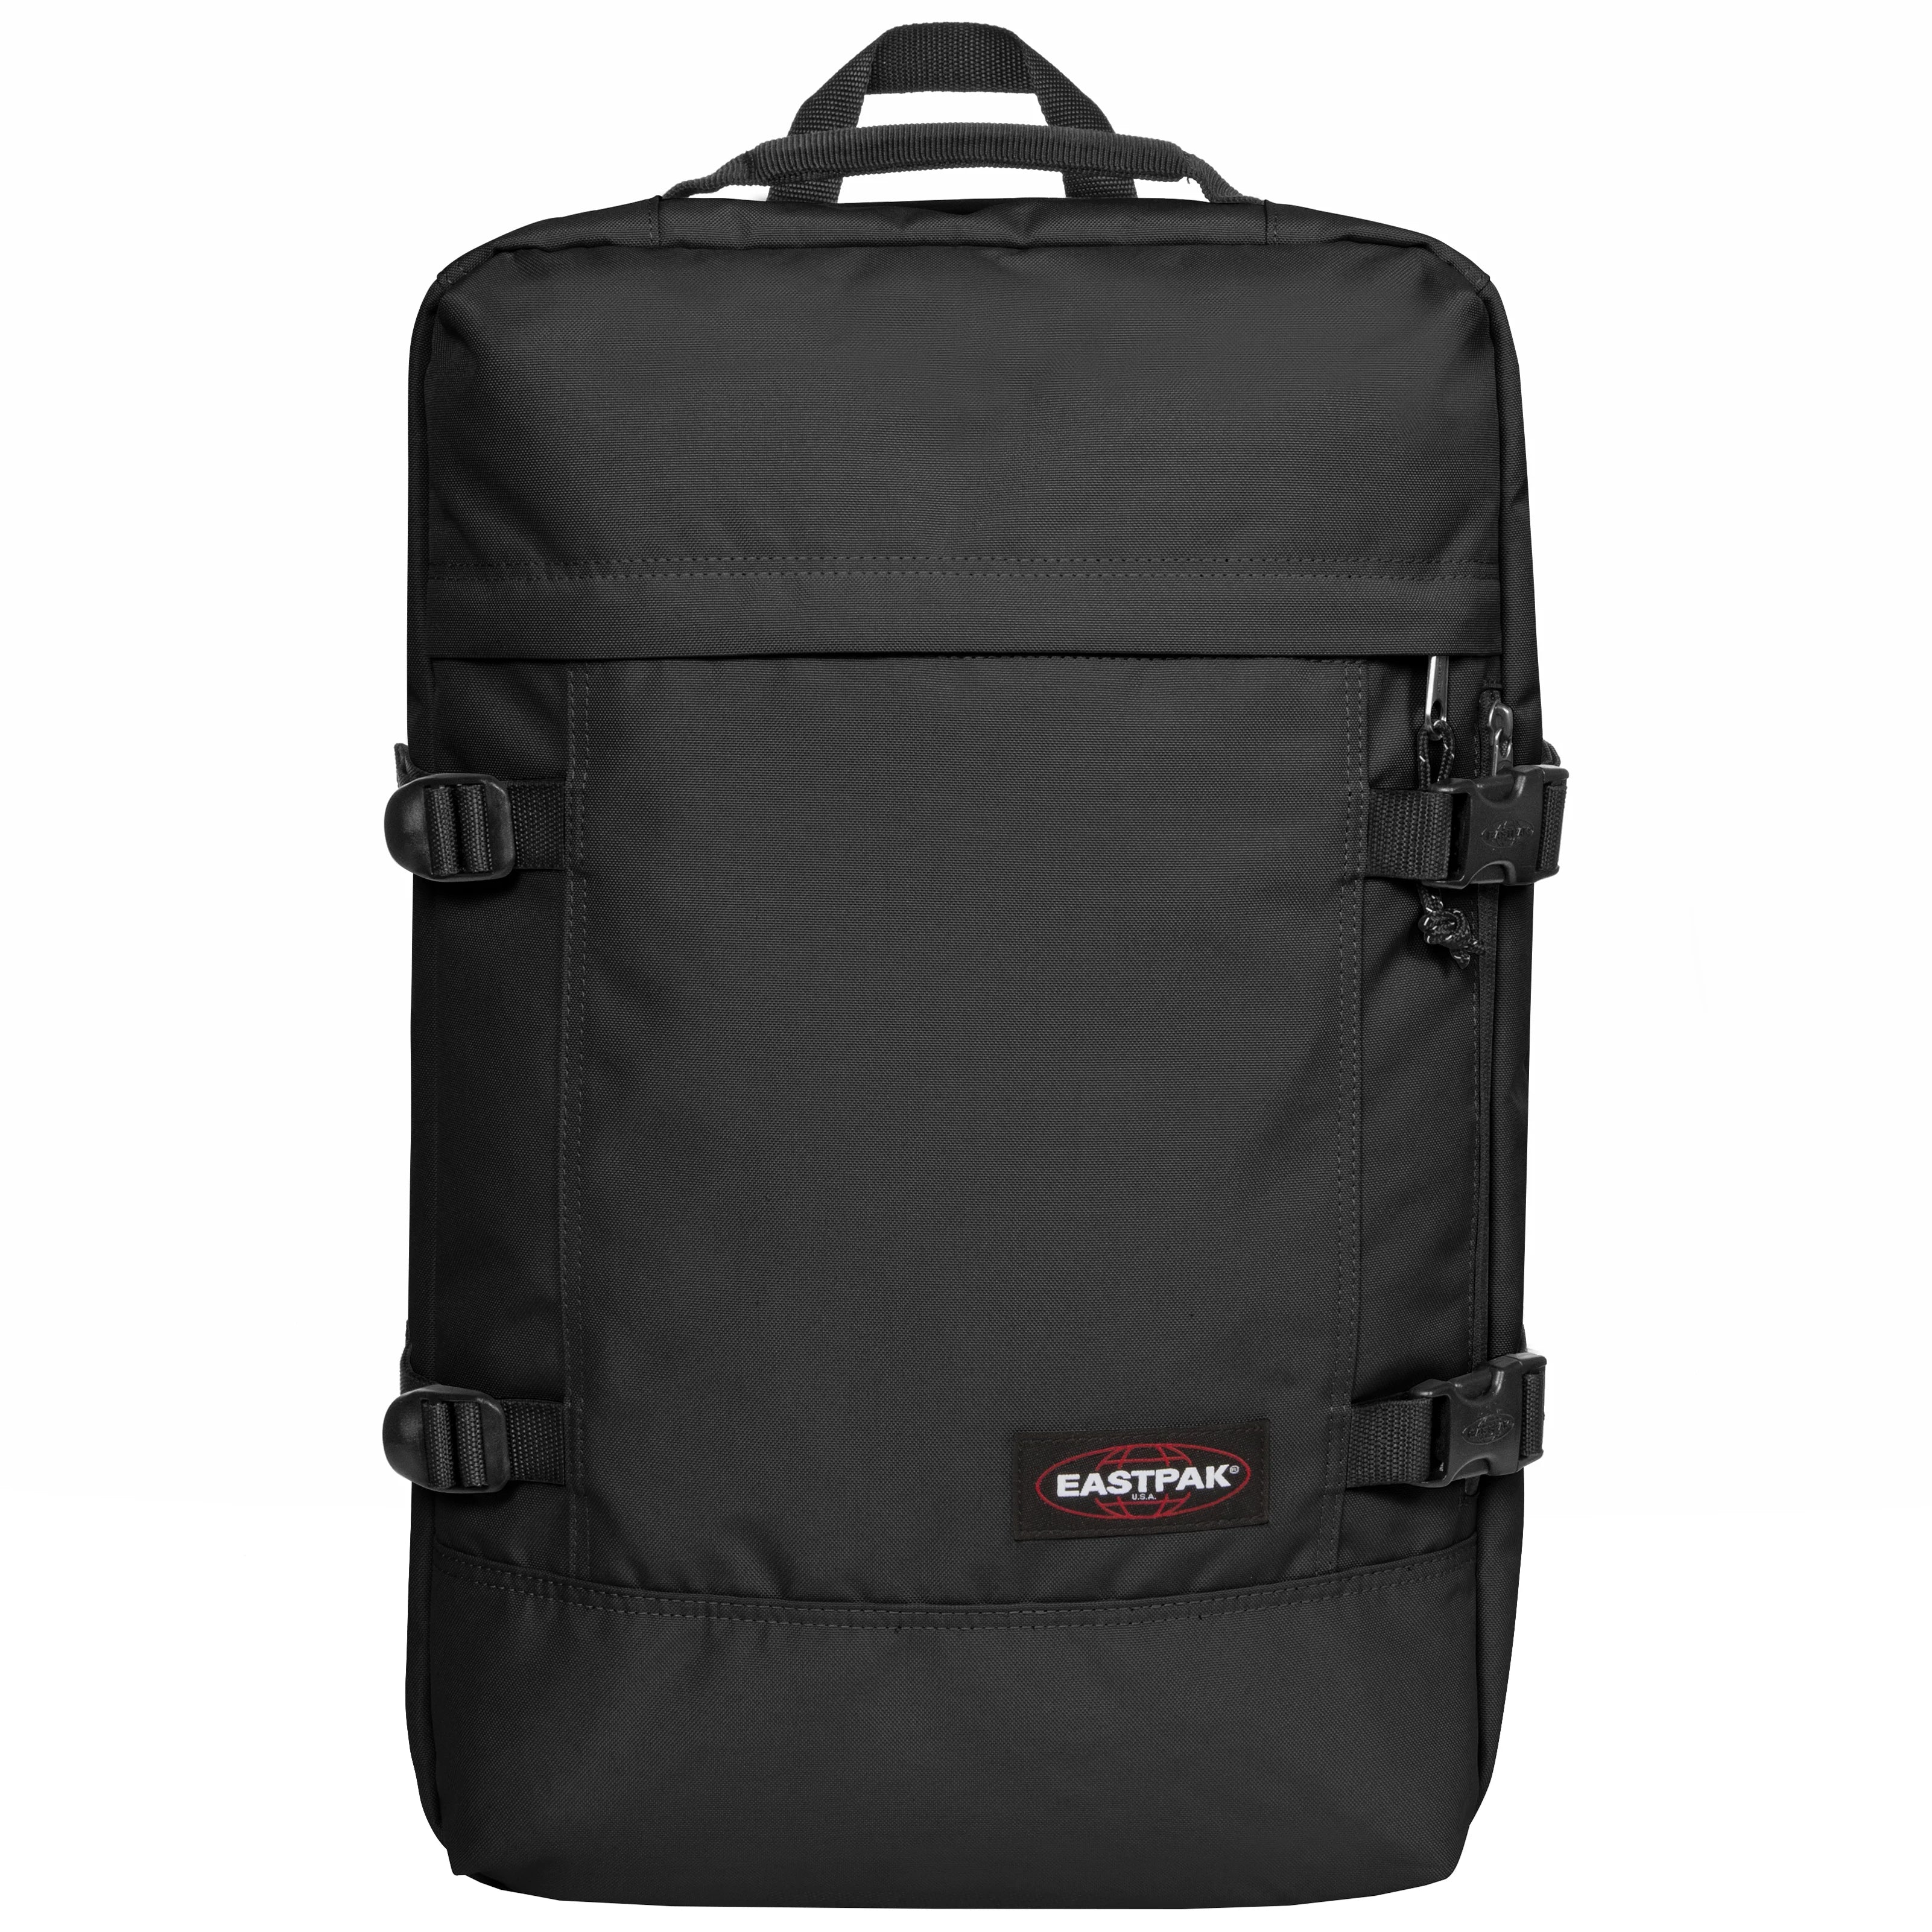 Eastpak Authentic Tranzpack Backpack 51 cm - Black